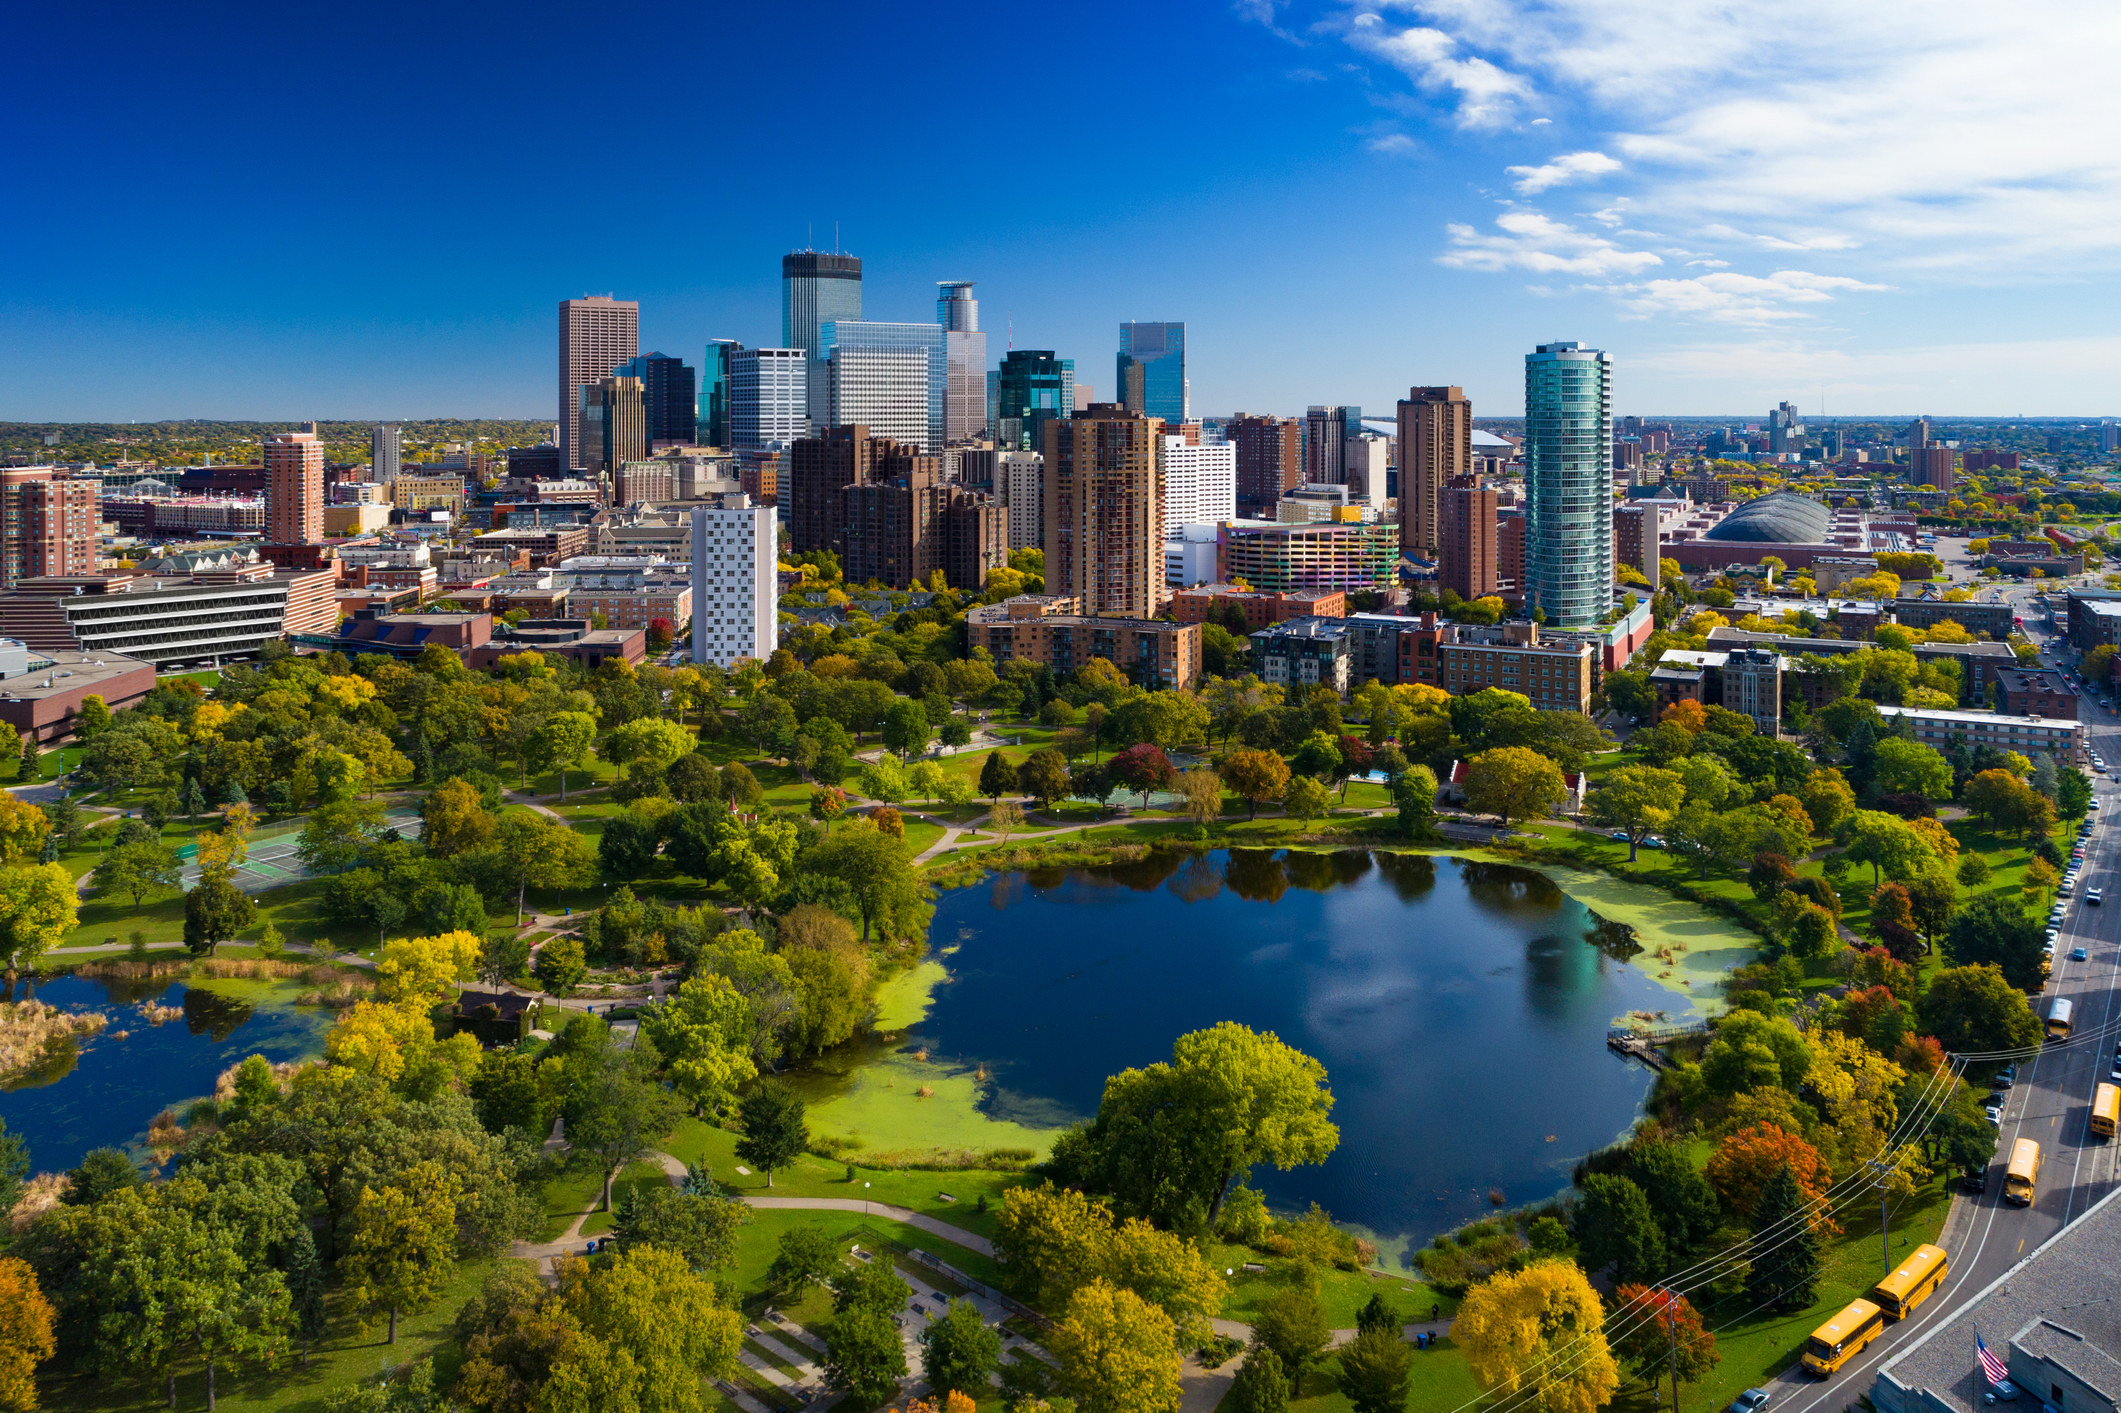 View of parks surrounding Minneapolis